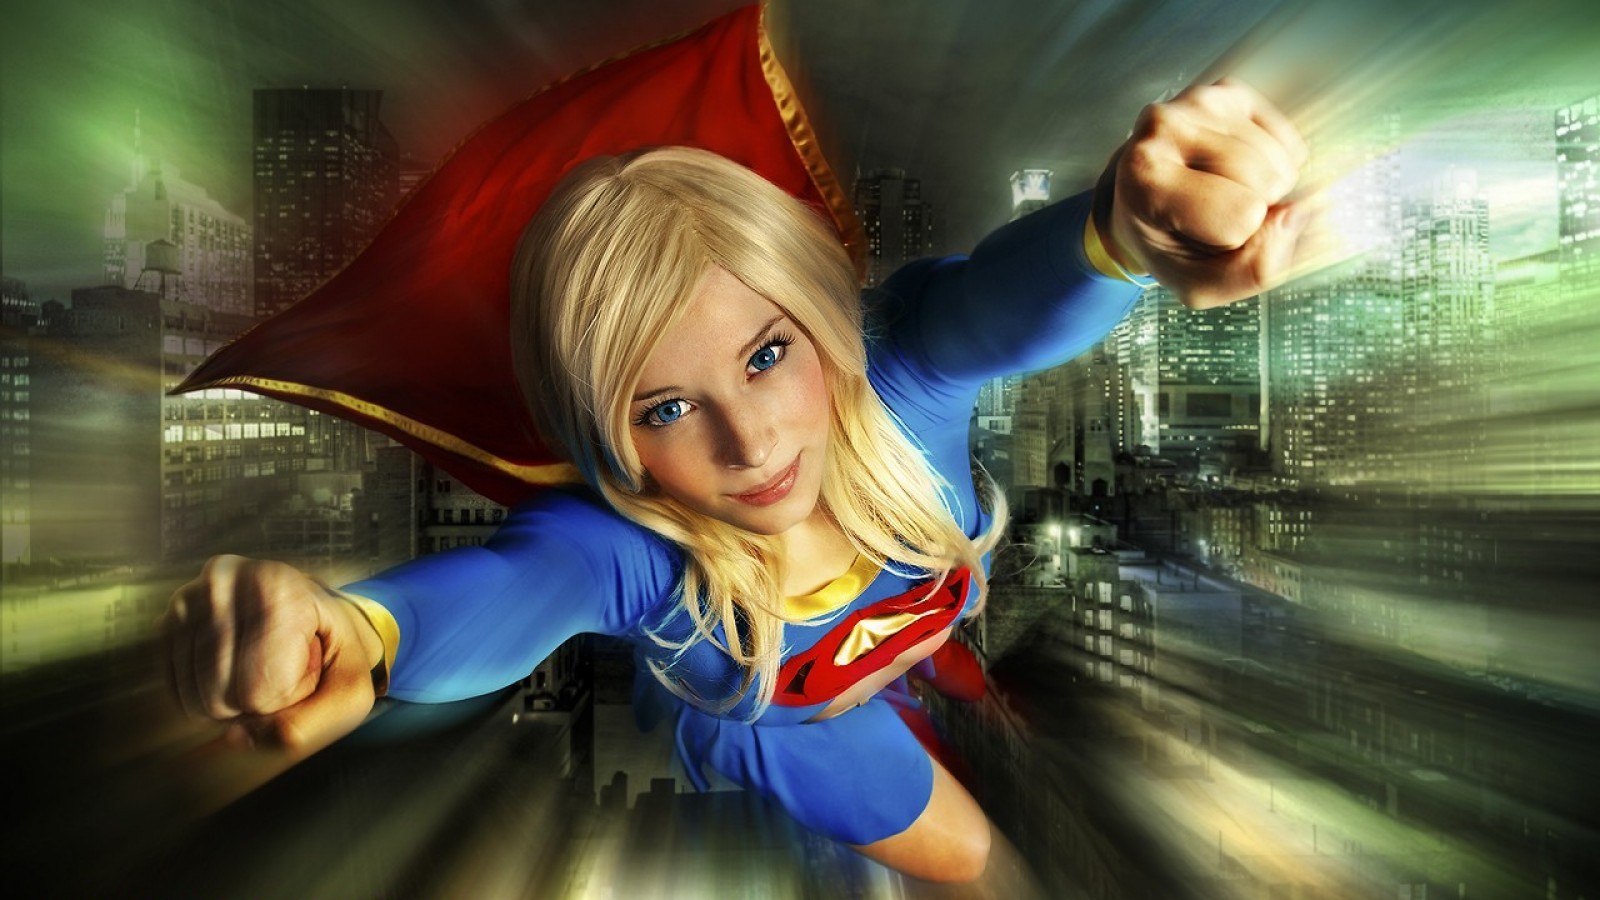 Supergirl, Superhero, Blonde, Flying, Blue Eyes, Women, Building, Enji Night Wallpaper